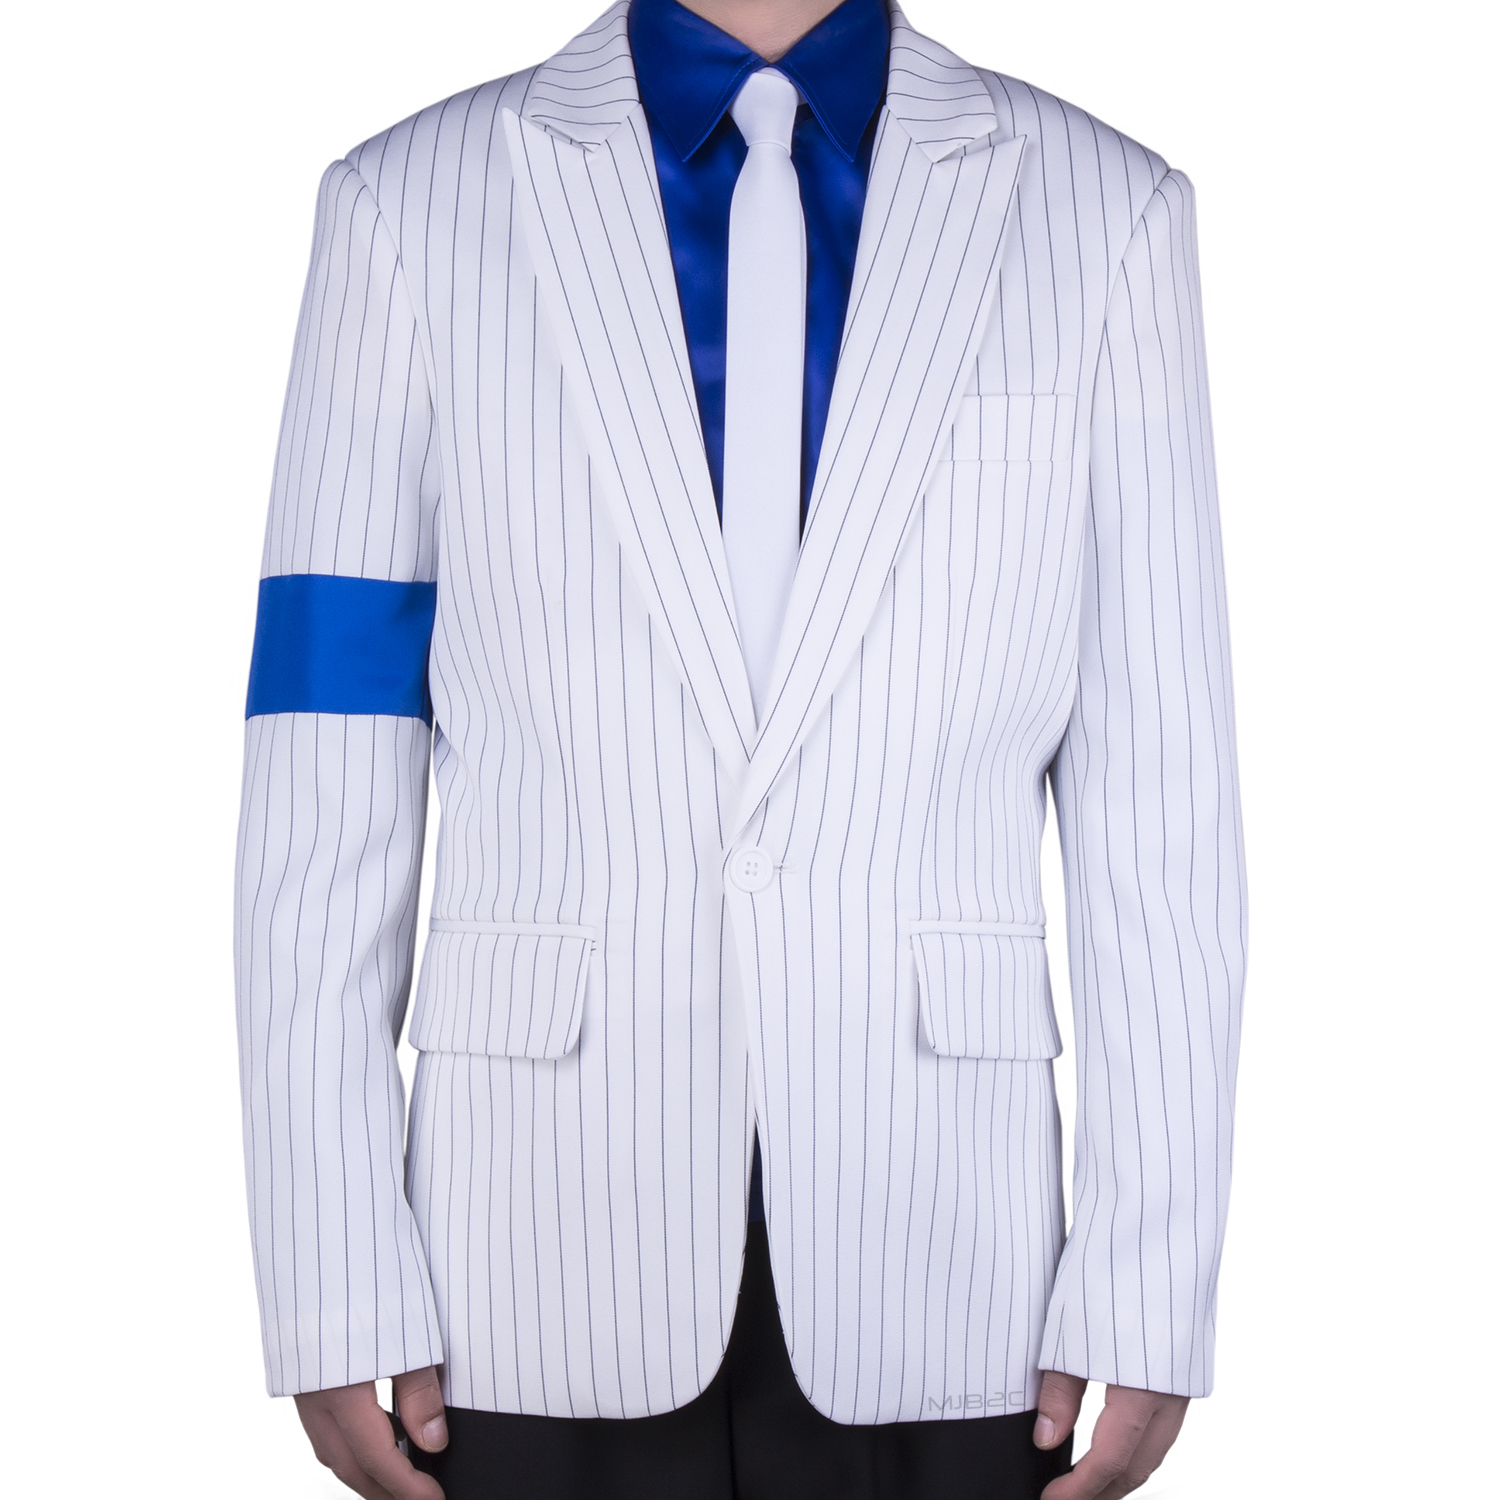 Michael Jackson Smooth Criminal Suit Uniform Men's Cosplay Costume set